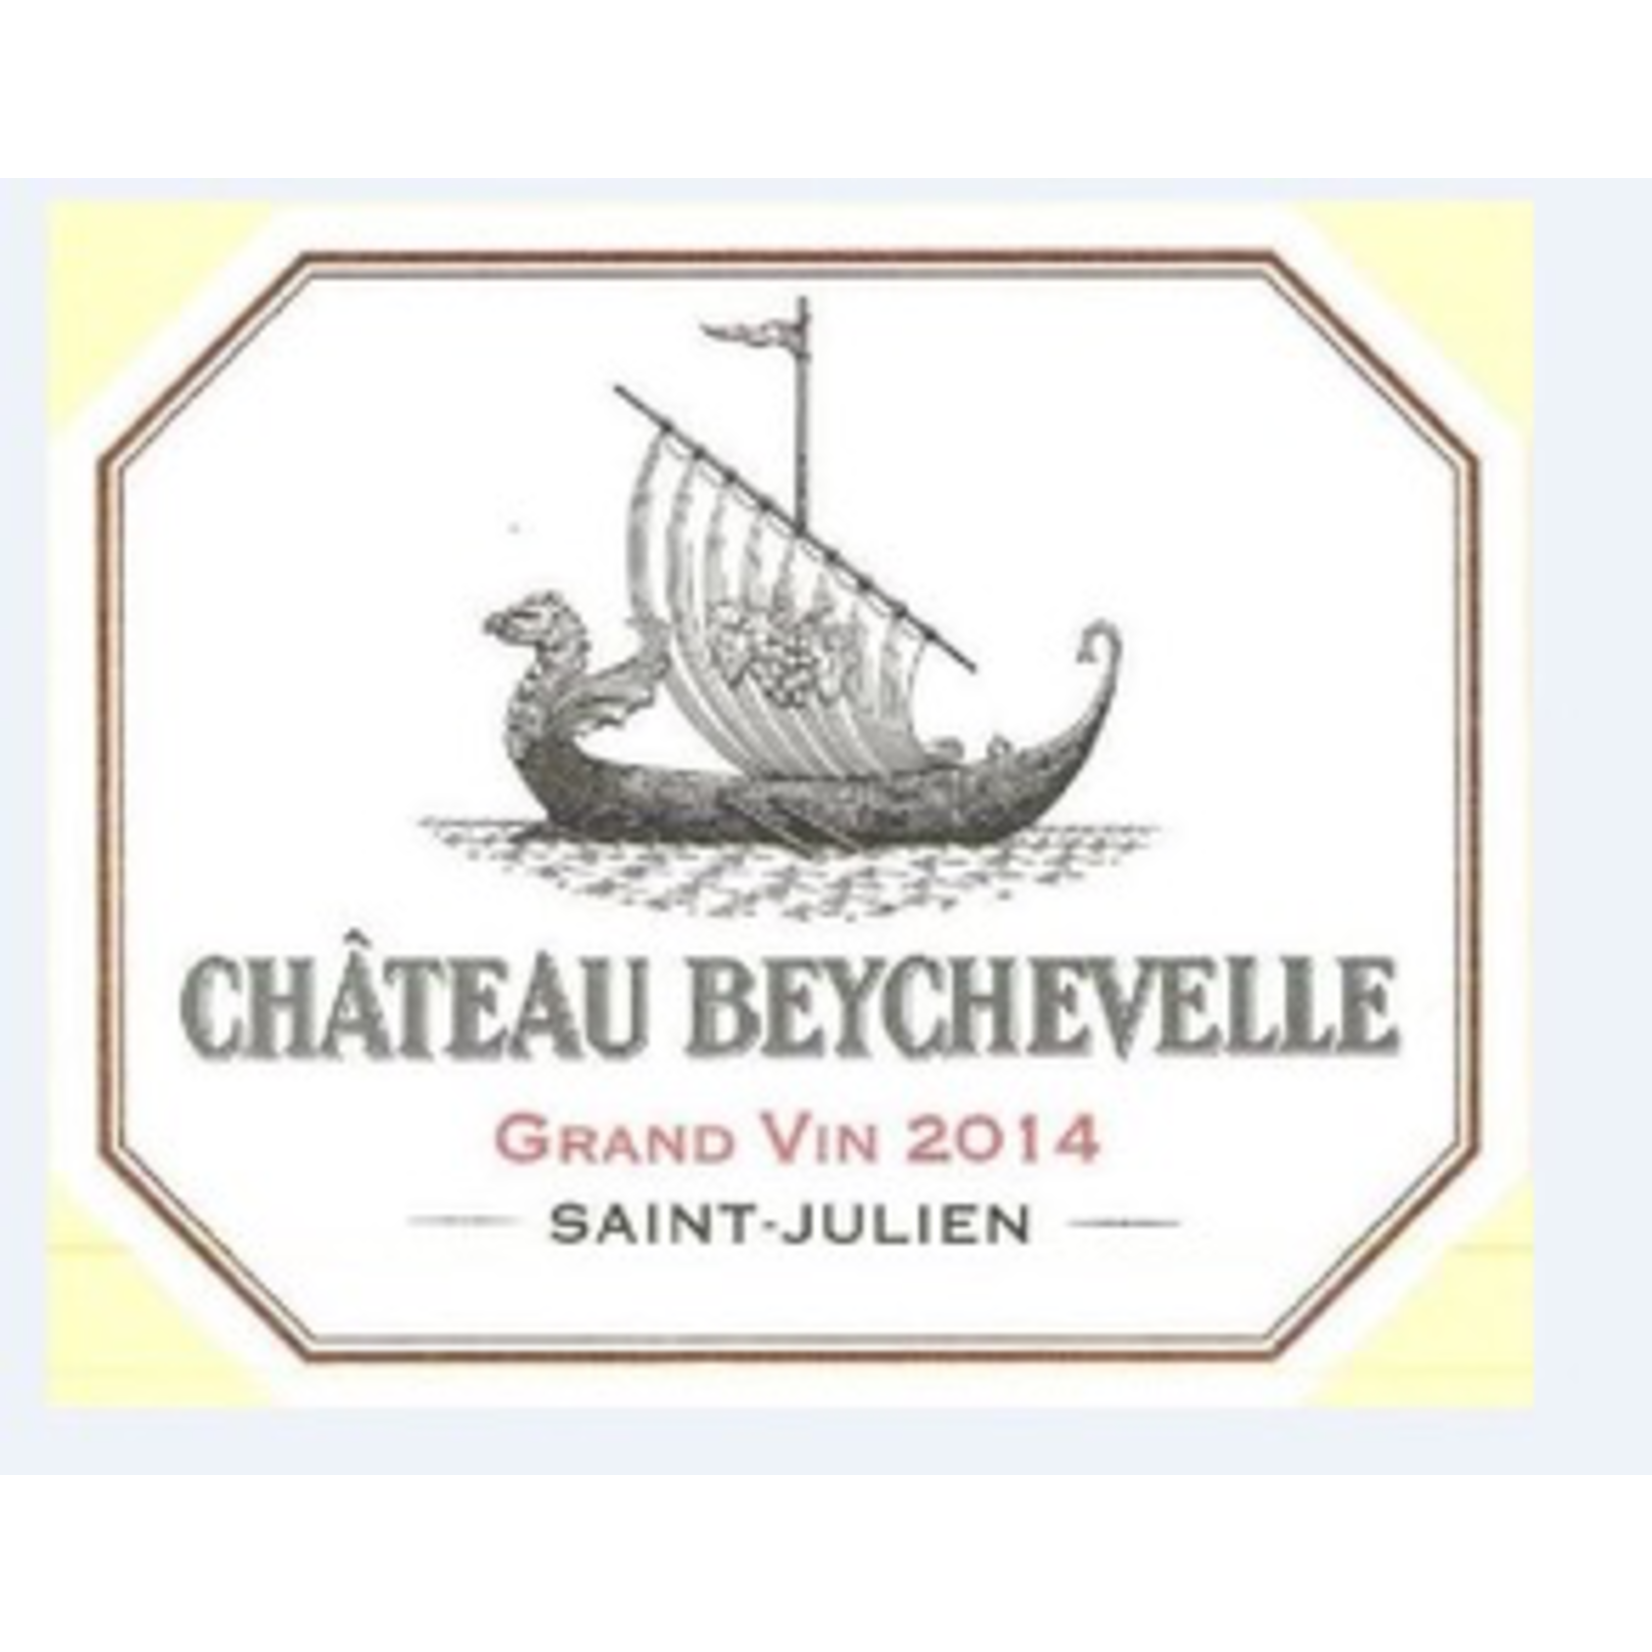 Wine Chateau Beychevelle Saint-Julien 2014